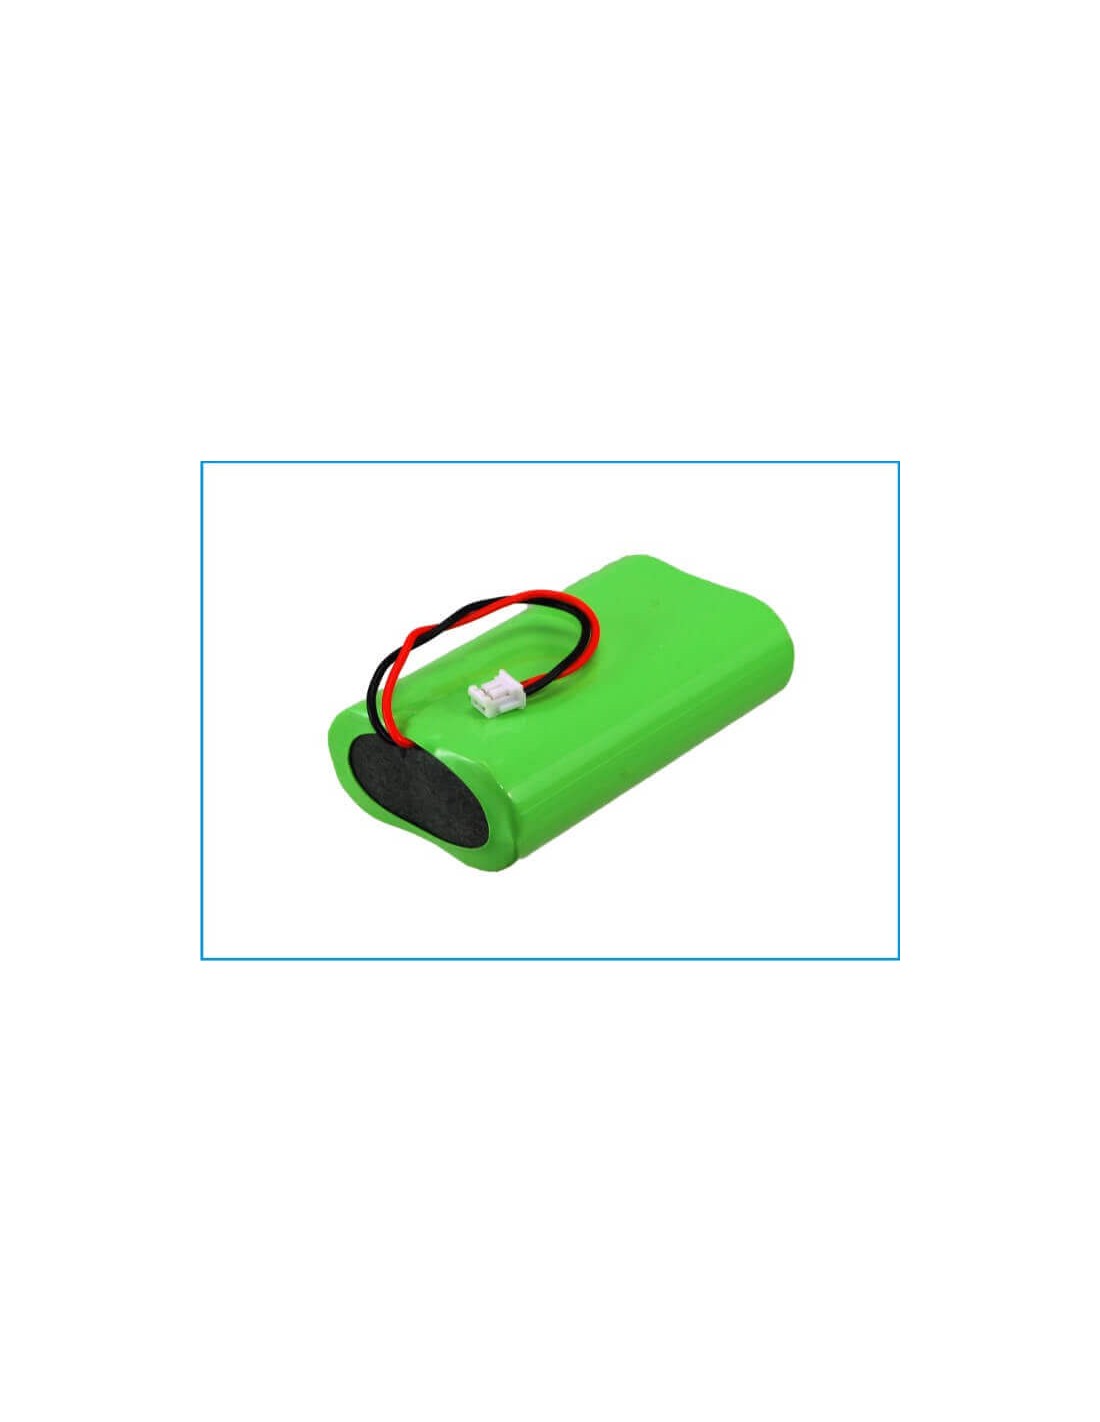 Battery for Intermec Norand 6210, Norand 6212, Norand 6220 2.4V, 2000mAh - 4.80Wh